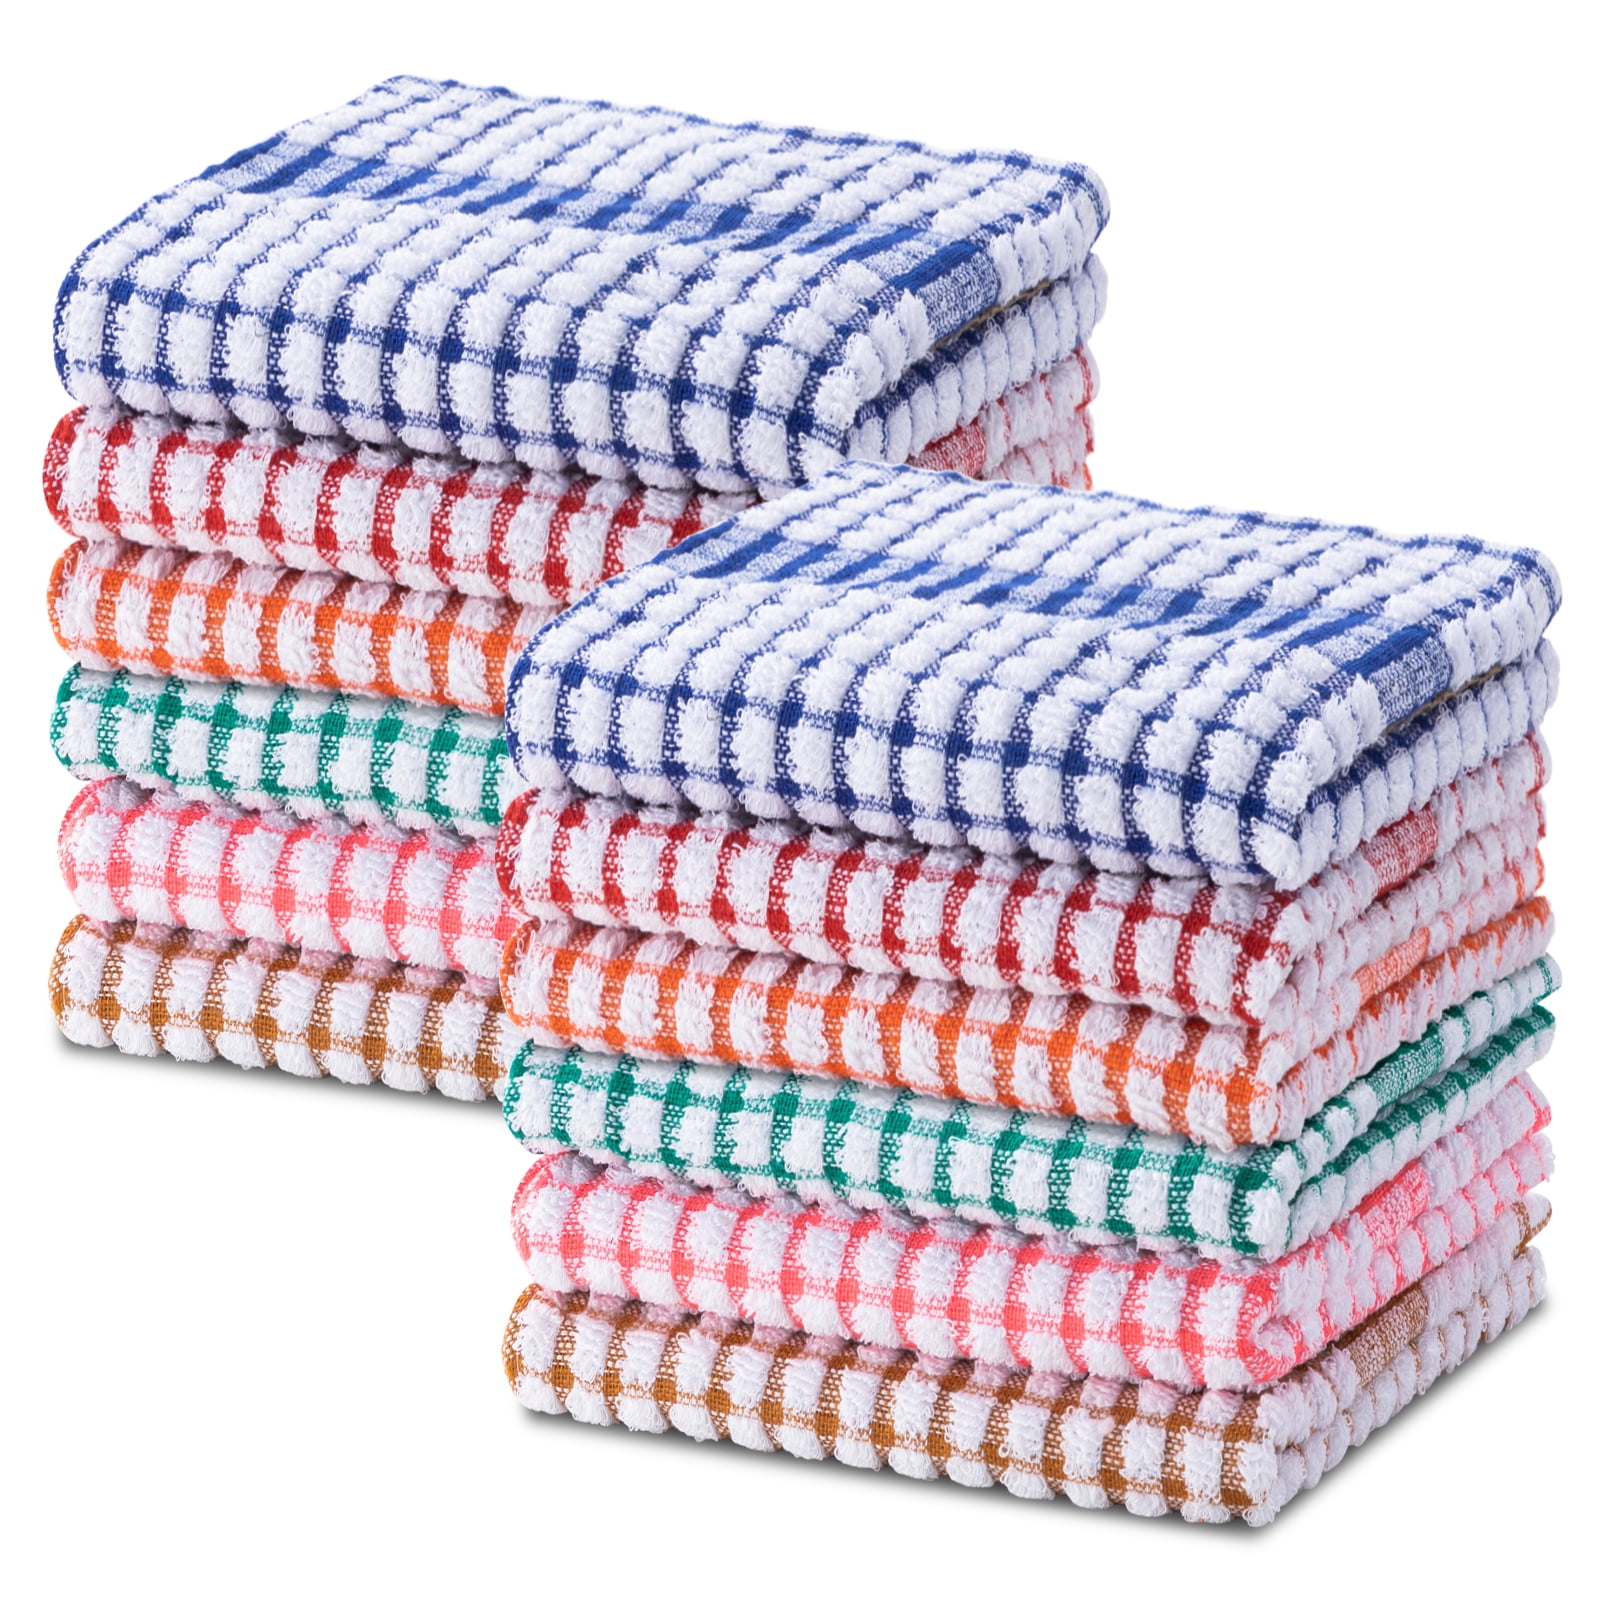 Kitchen Dish Towels, 16 Inch X 25 Inch Bulk Cotton Kitchen Towels